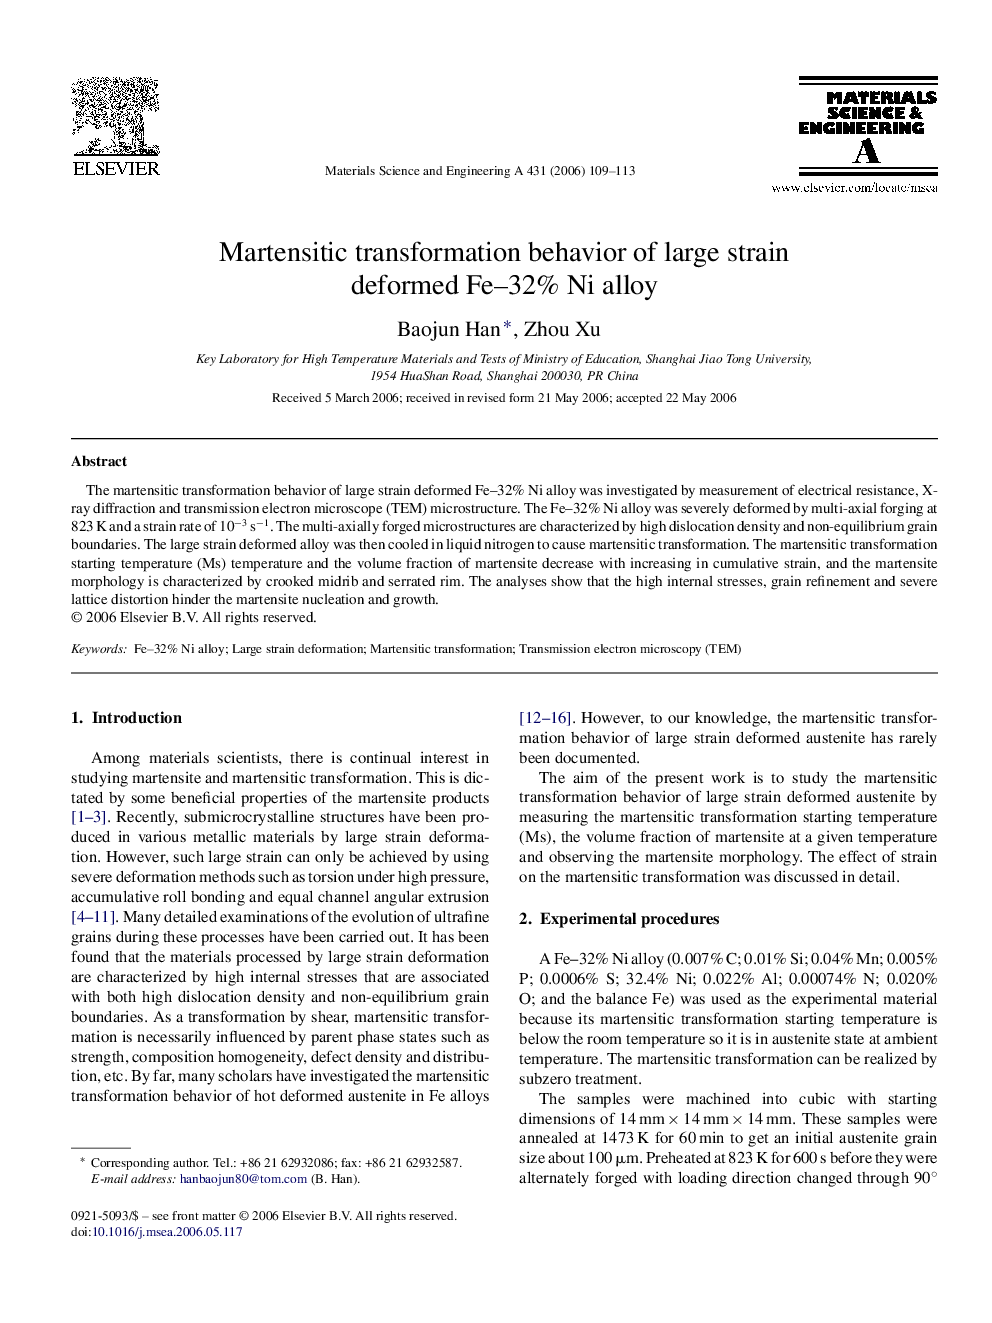 Martensitic transformation behavior of large strain deformed Fe–32% Ni alloy